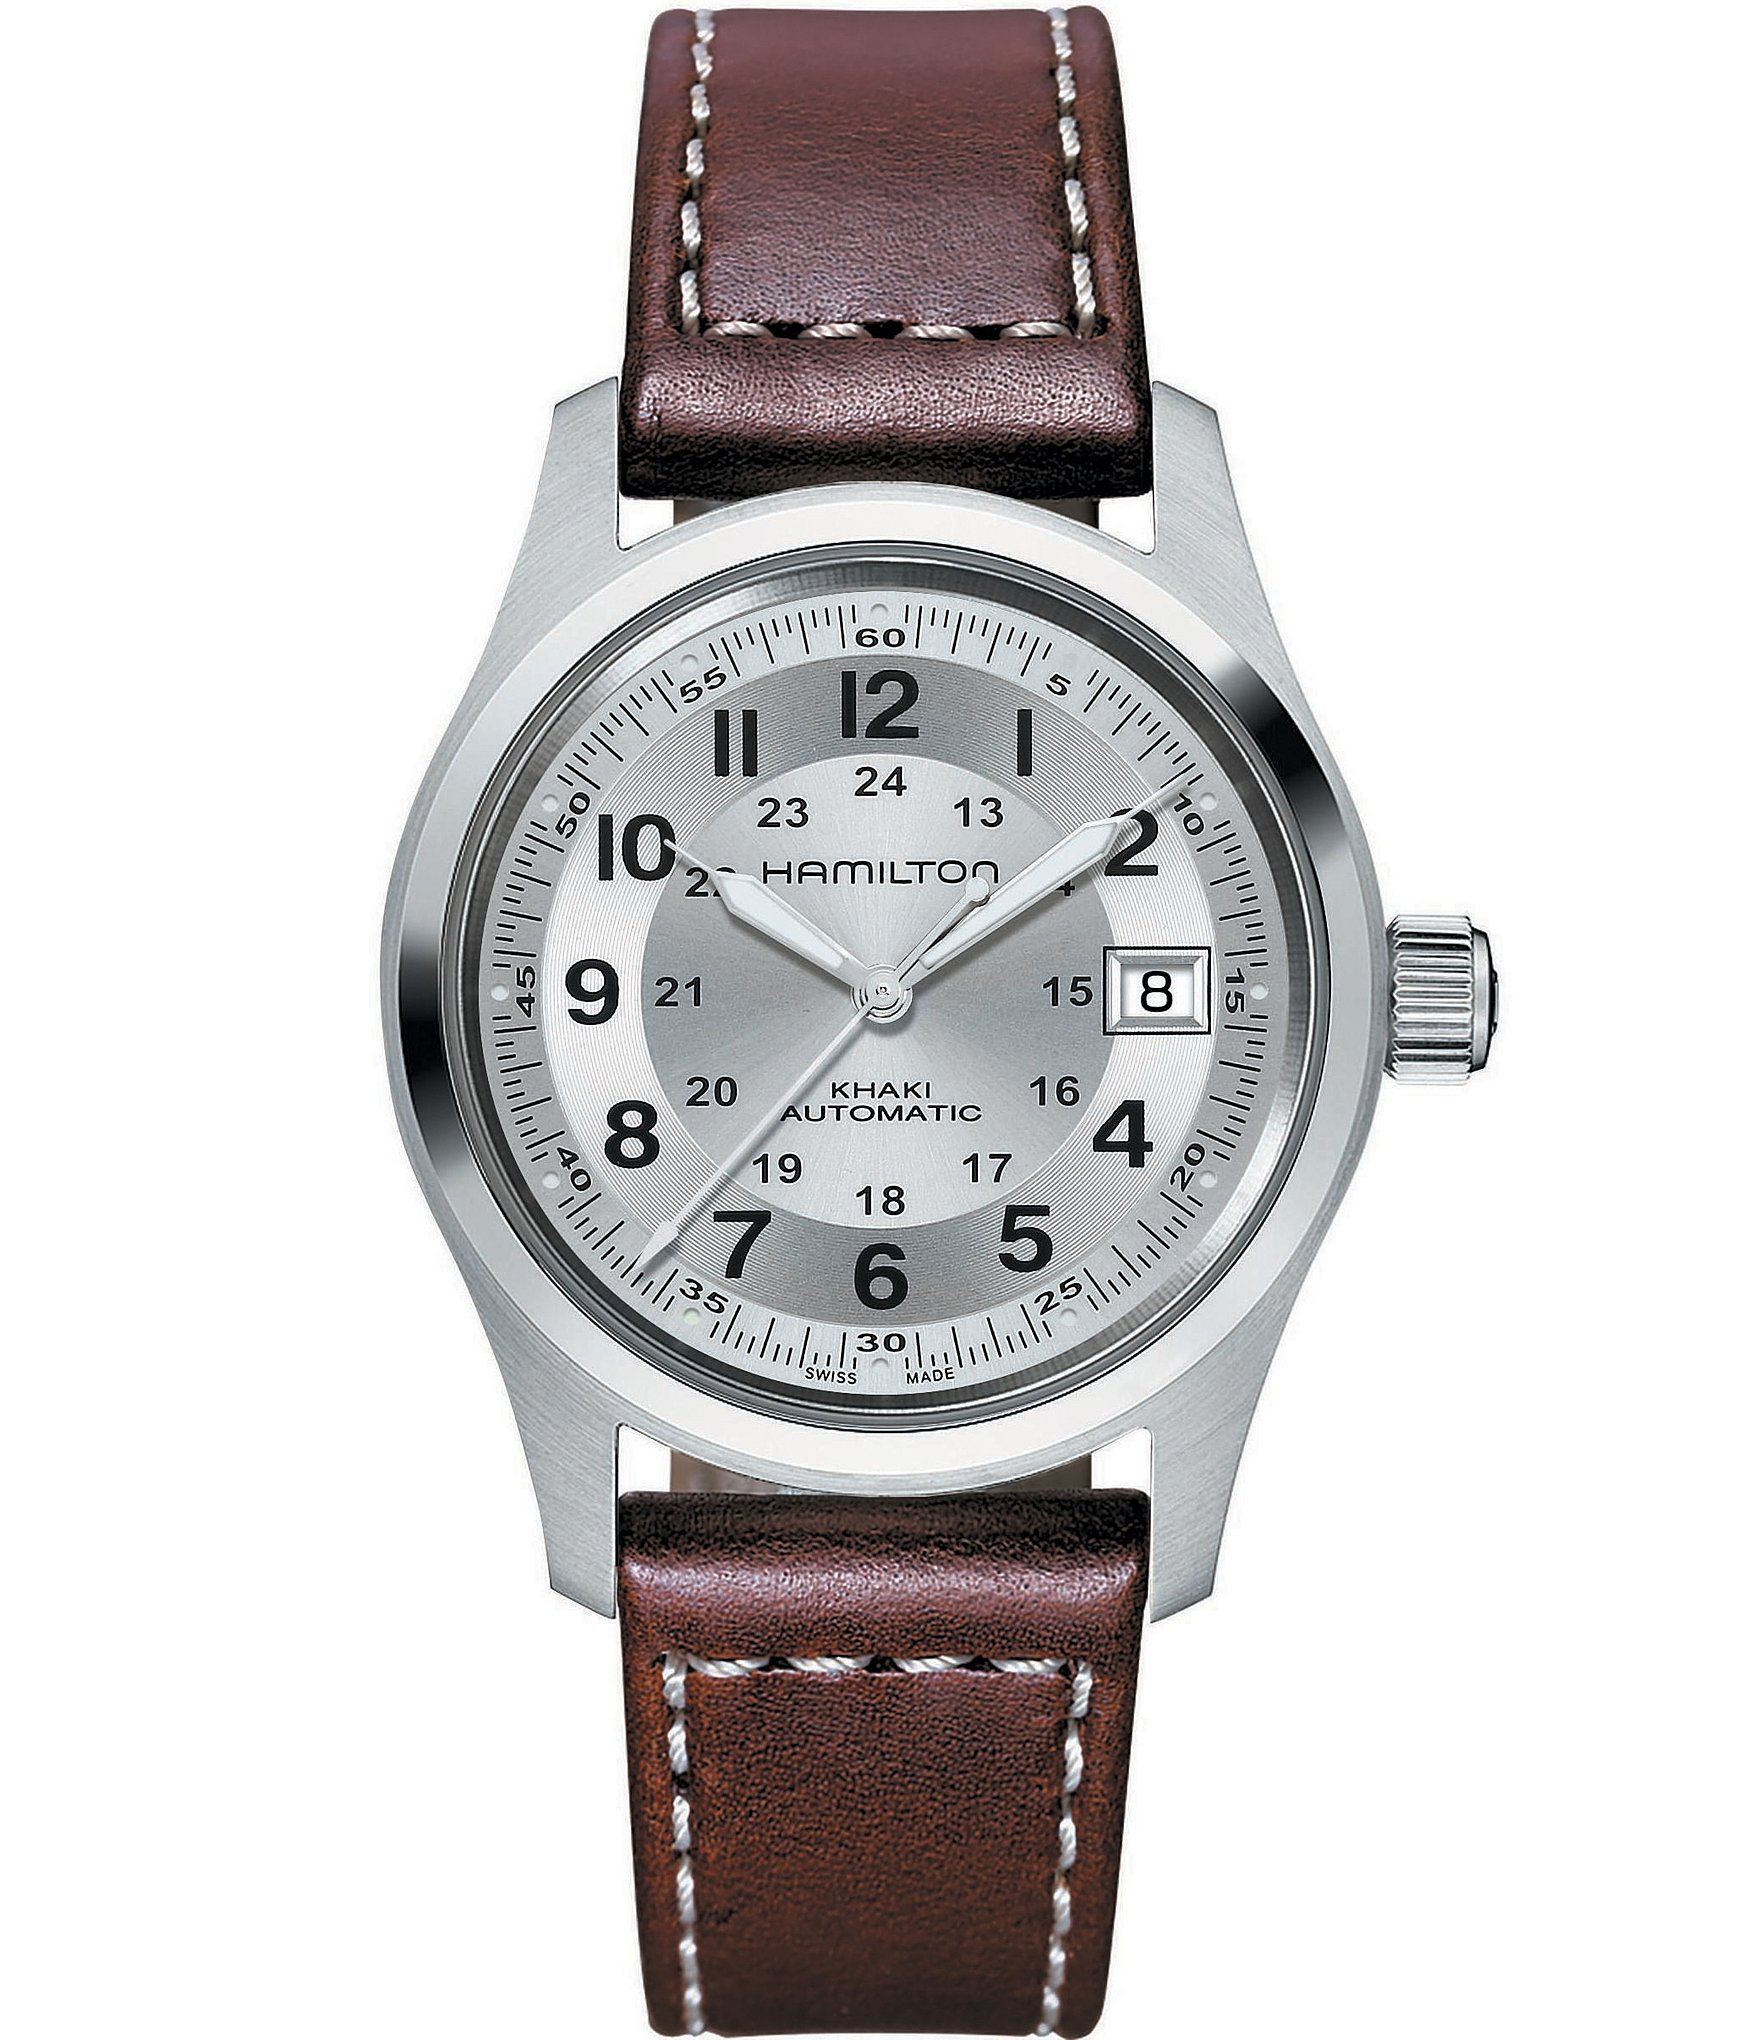 Men's Leather Watch, Steampunk Watch, Vintage Wrist Watch, Mechanical Watch,  Brown Leather Cuff, Watch Cuff, Leather Bracelet, Watch Band - Etsy